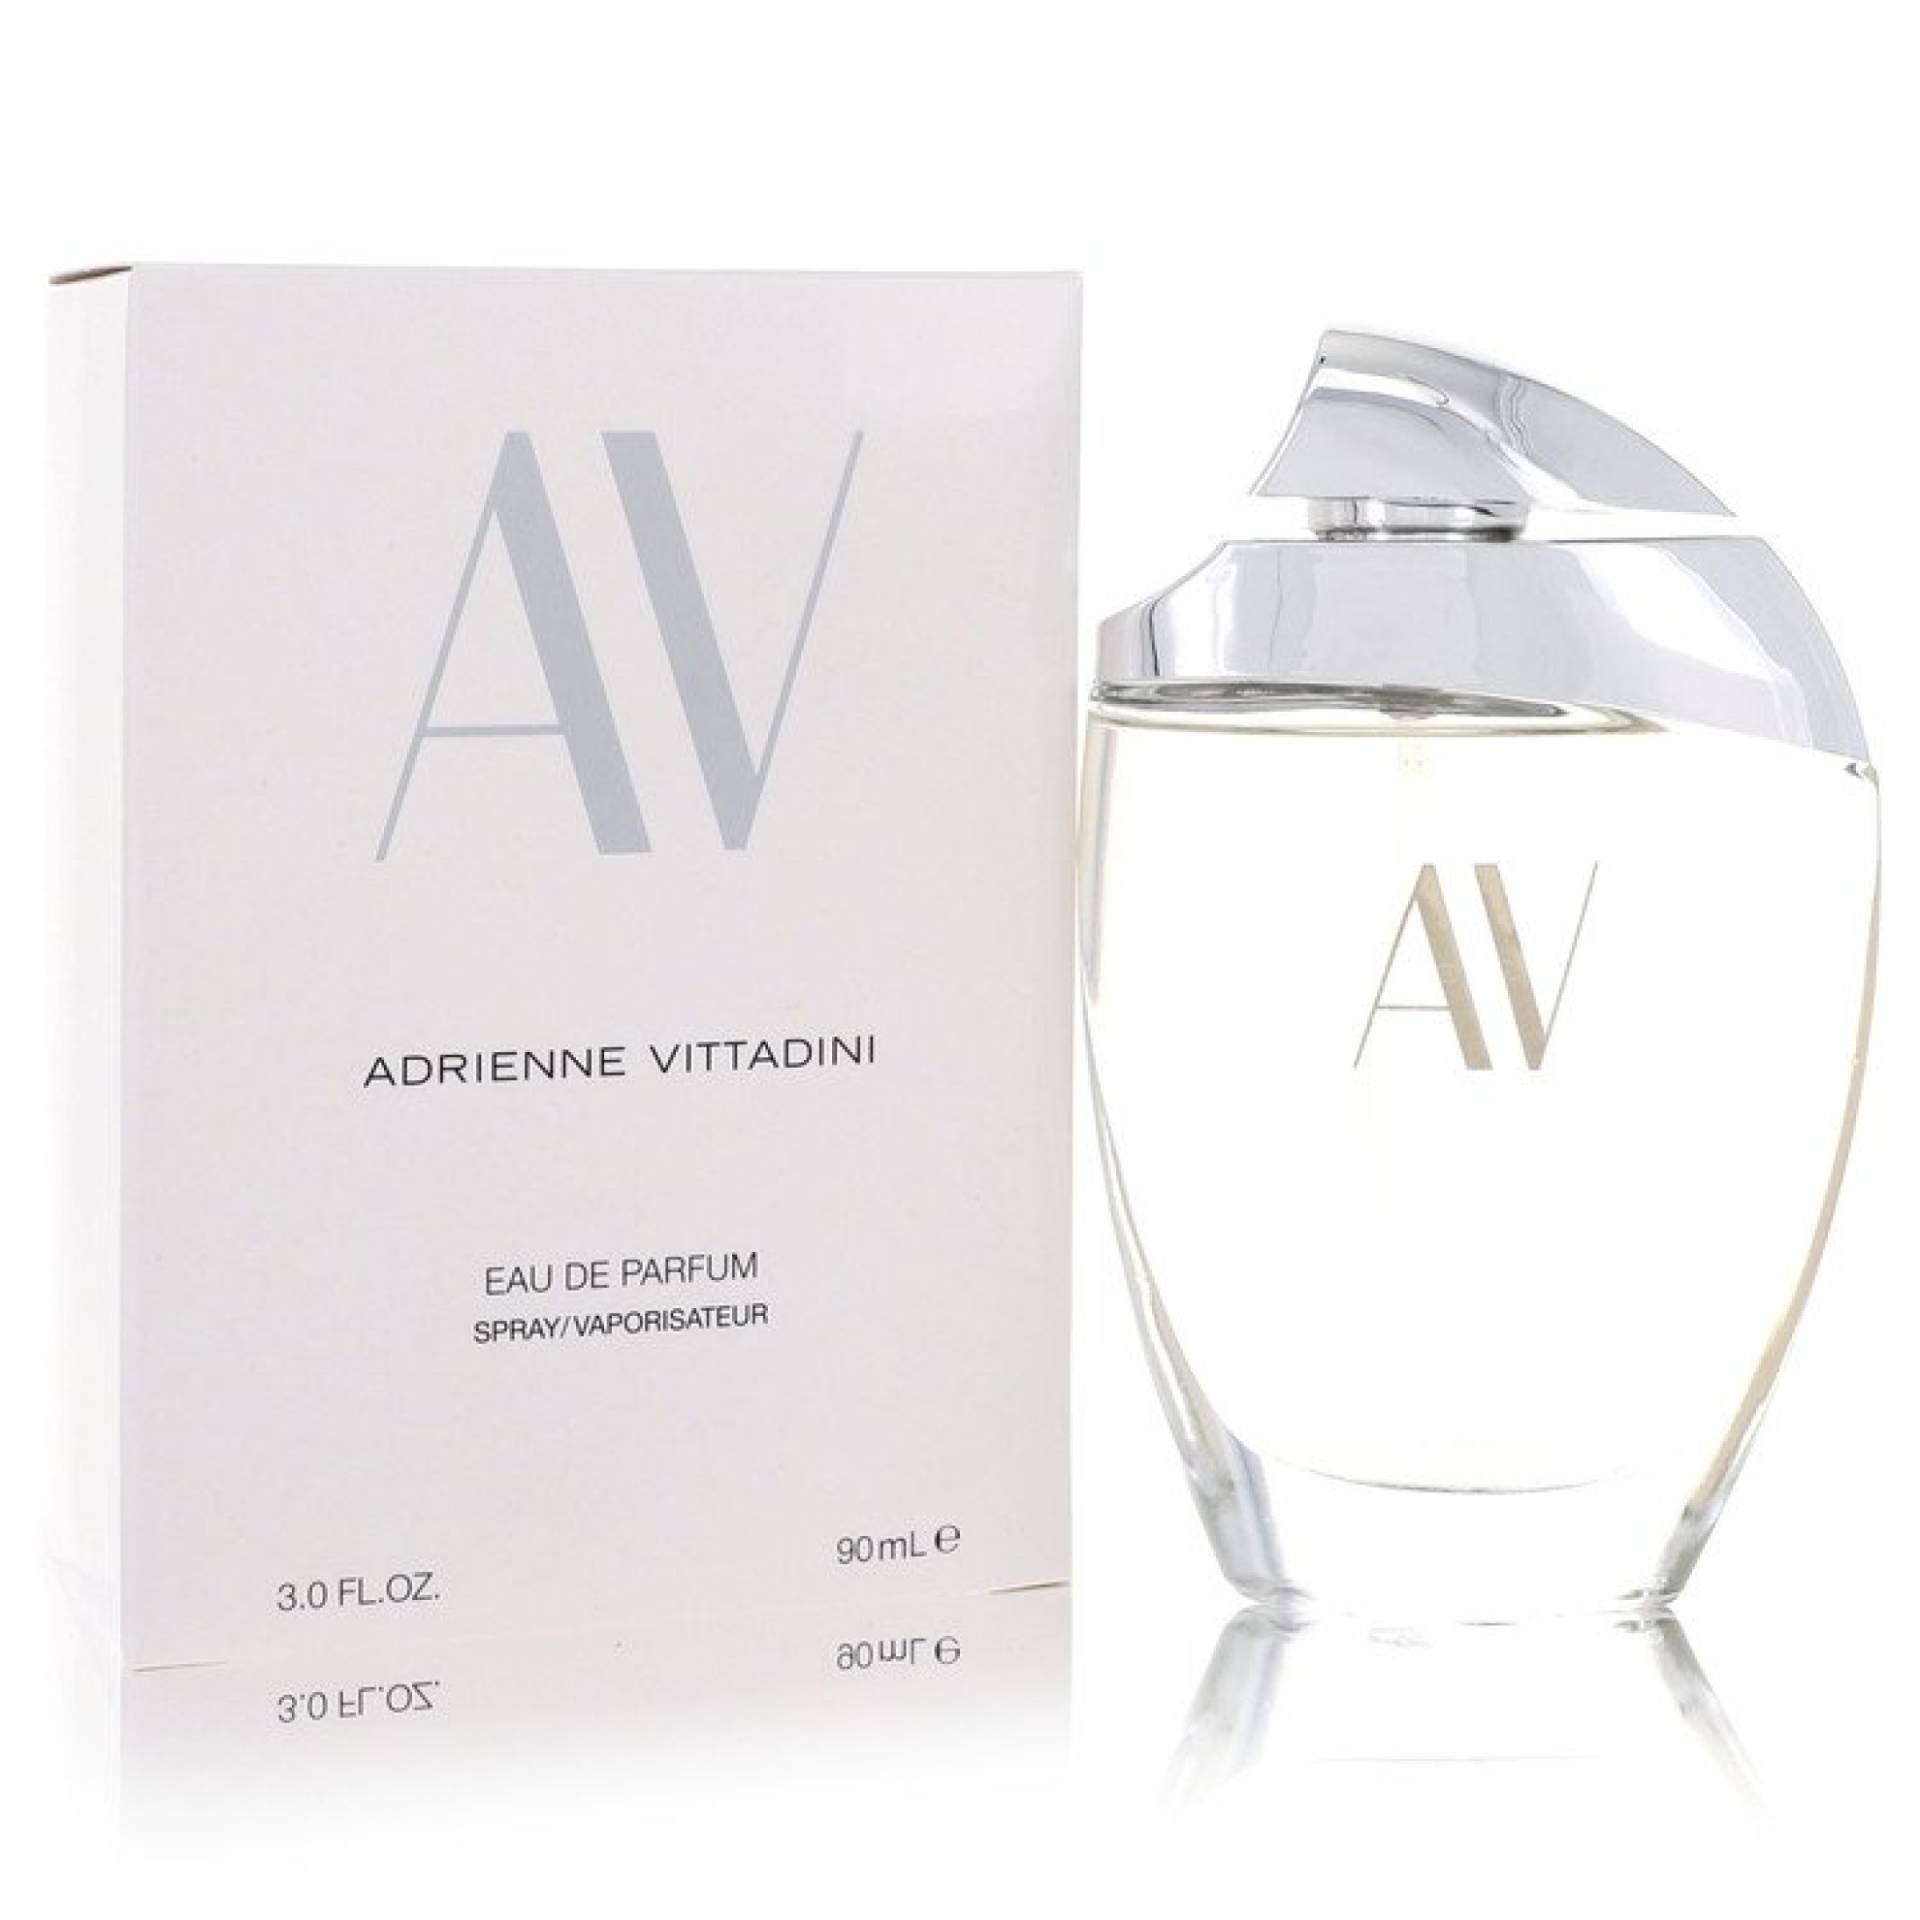 Adrienne Vittadini AV Eau De Parfum Spray 90 ml von Adrienne Vittadini